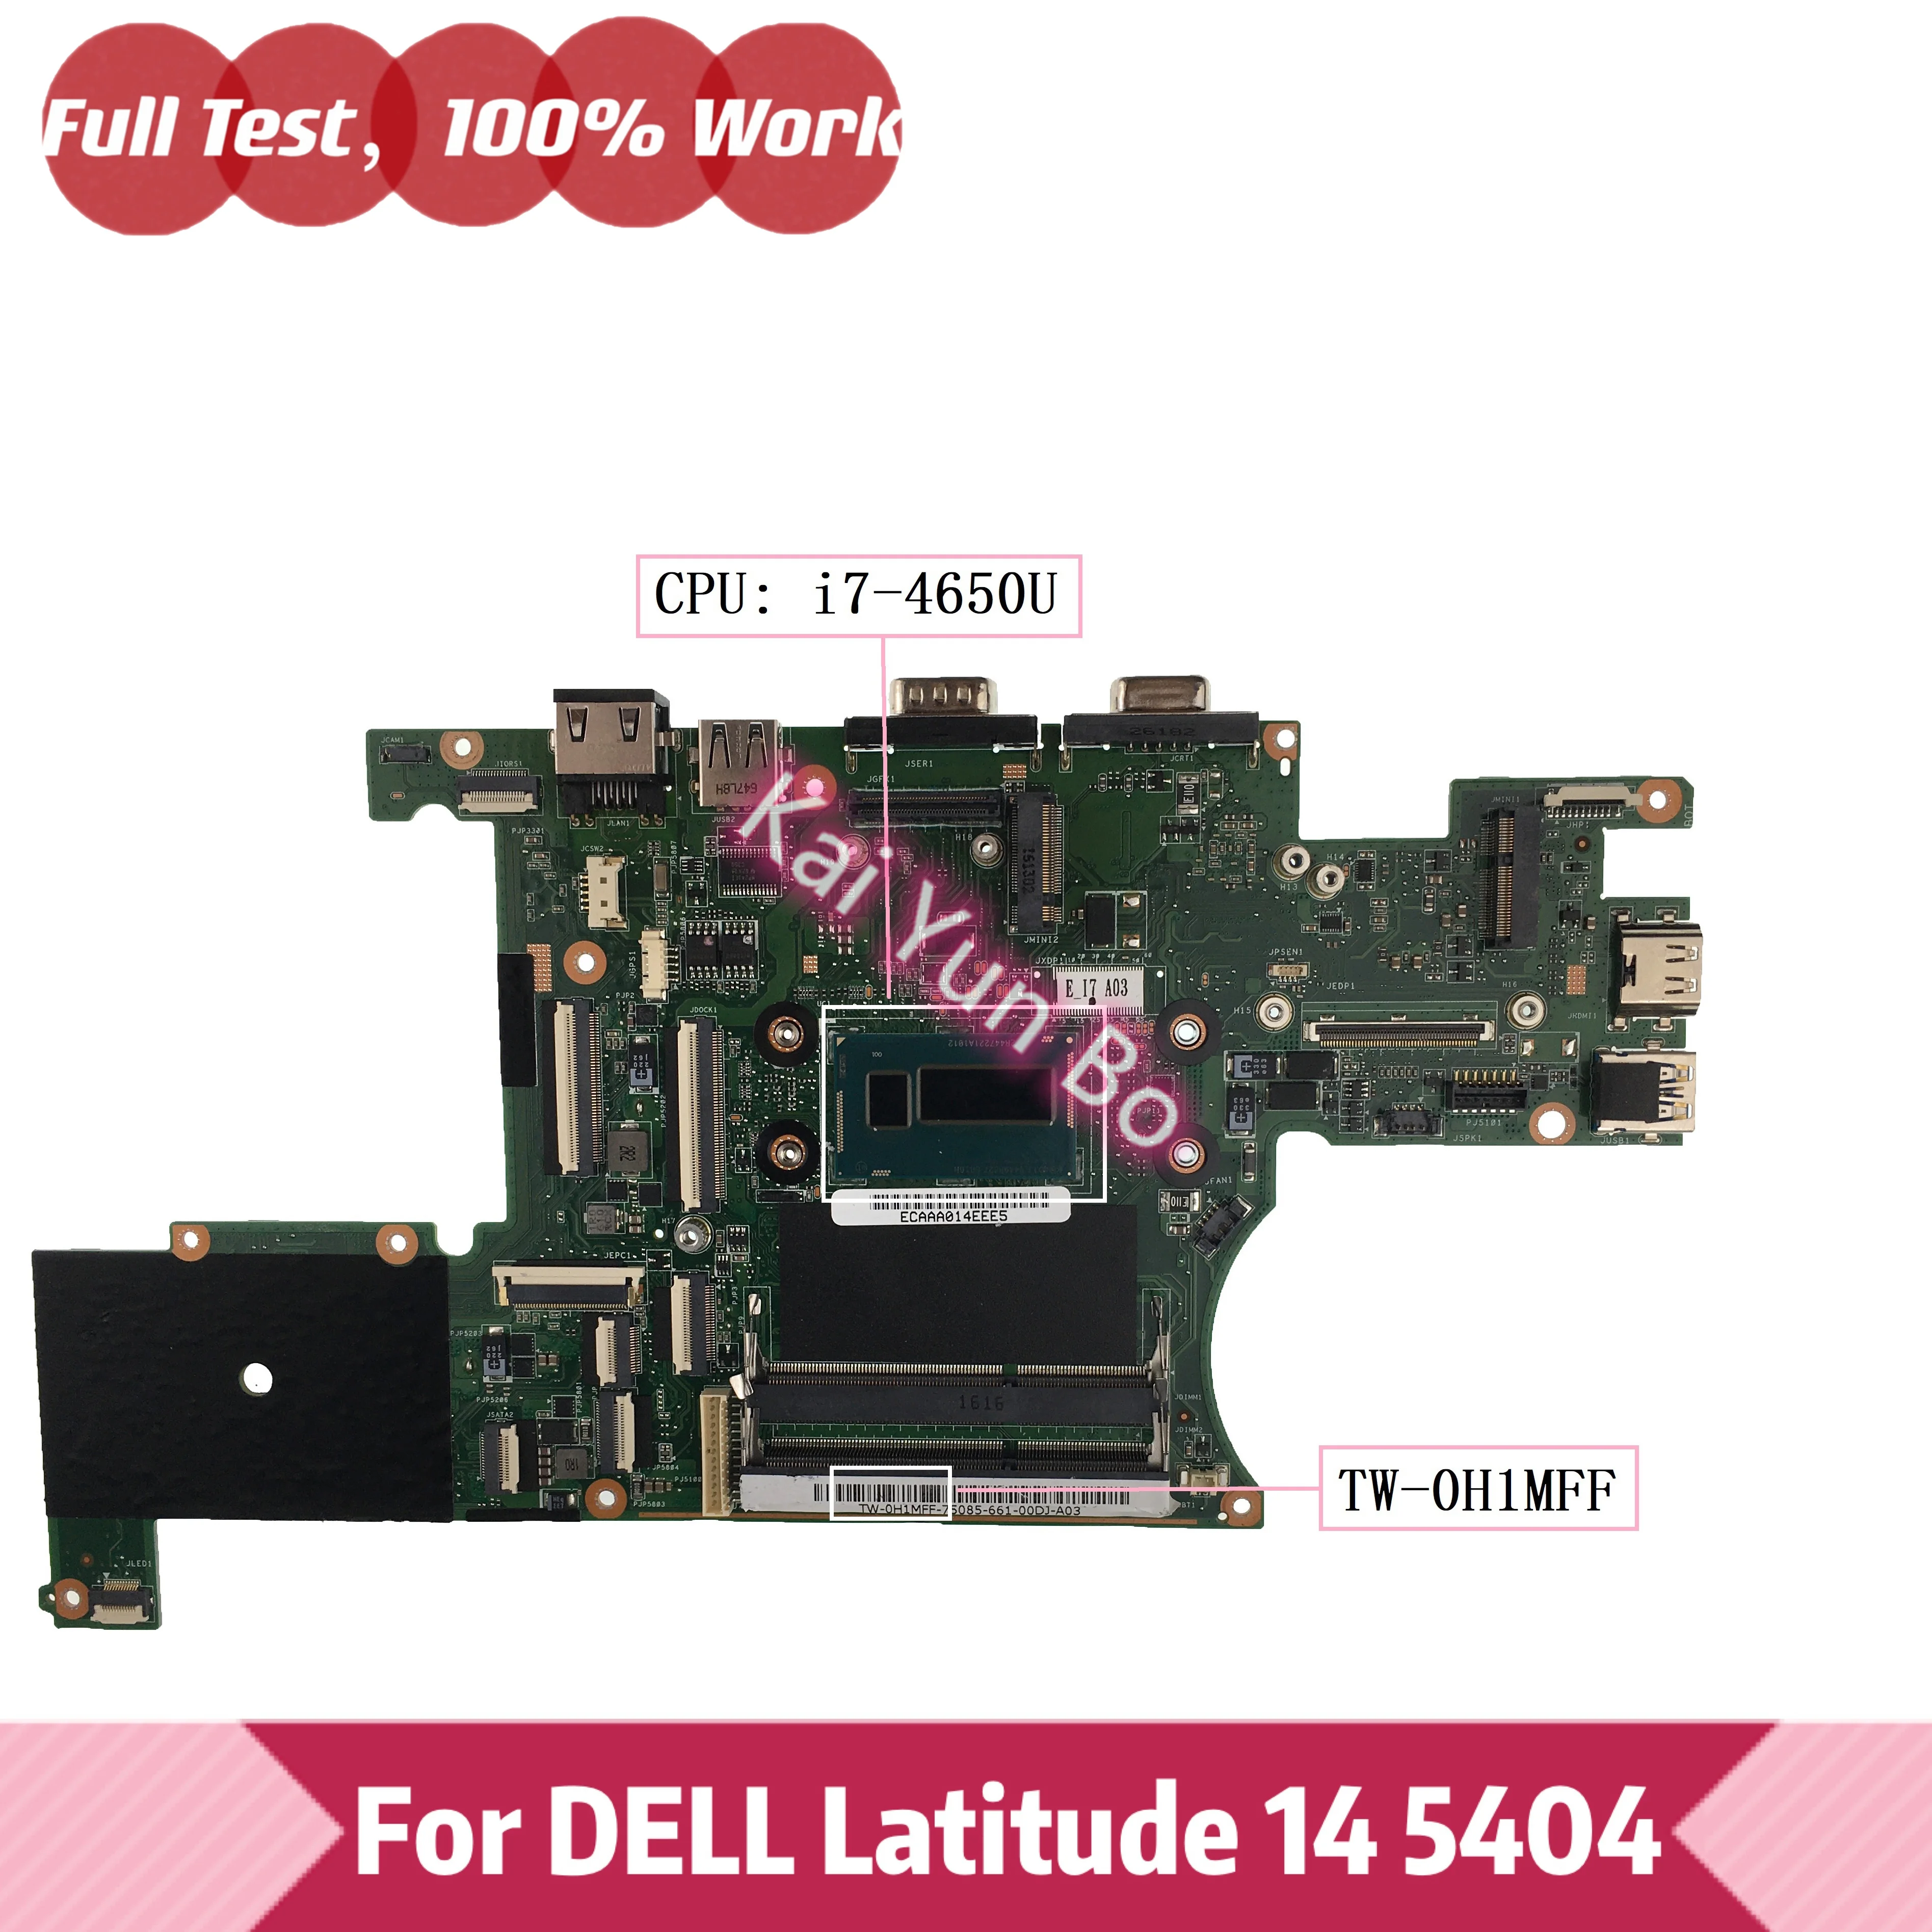 TW-0H1MFF CN-0H1MFF Для Dell Latitude 14 5404 7204 E7204 Материнская плата ноутбука 0H1MFF H1MFF С процессором I7-4650U DDR3 100% Полностью протестирована